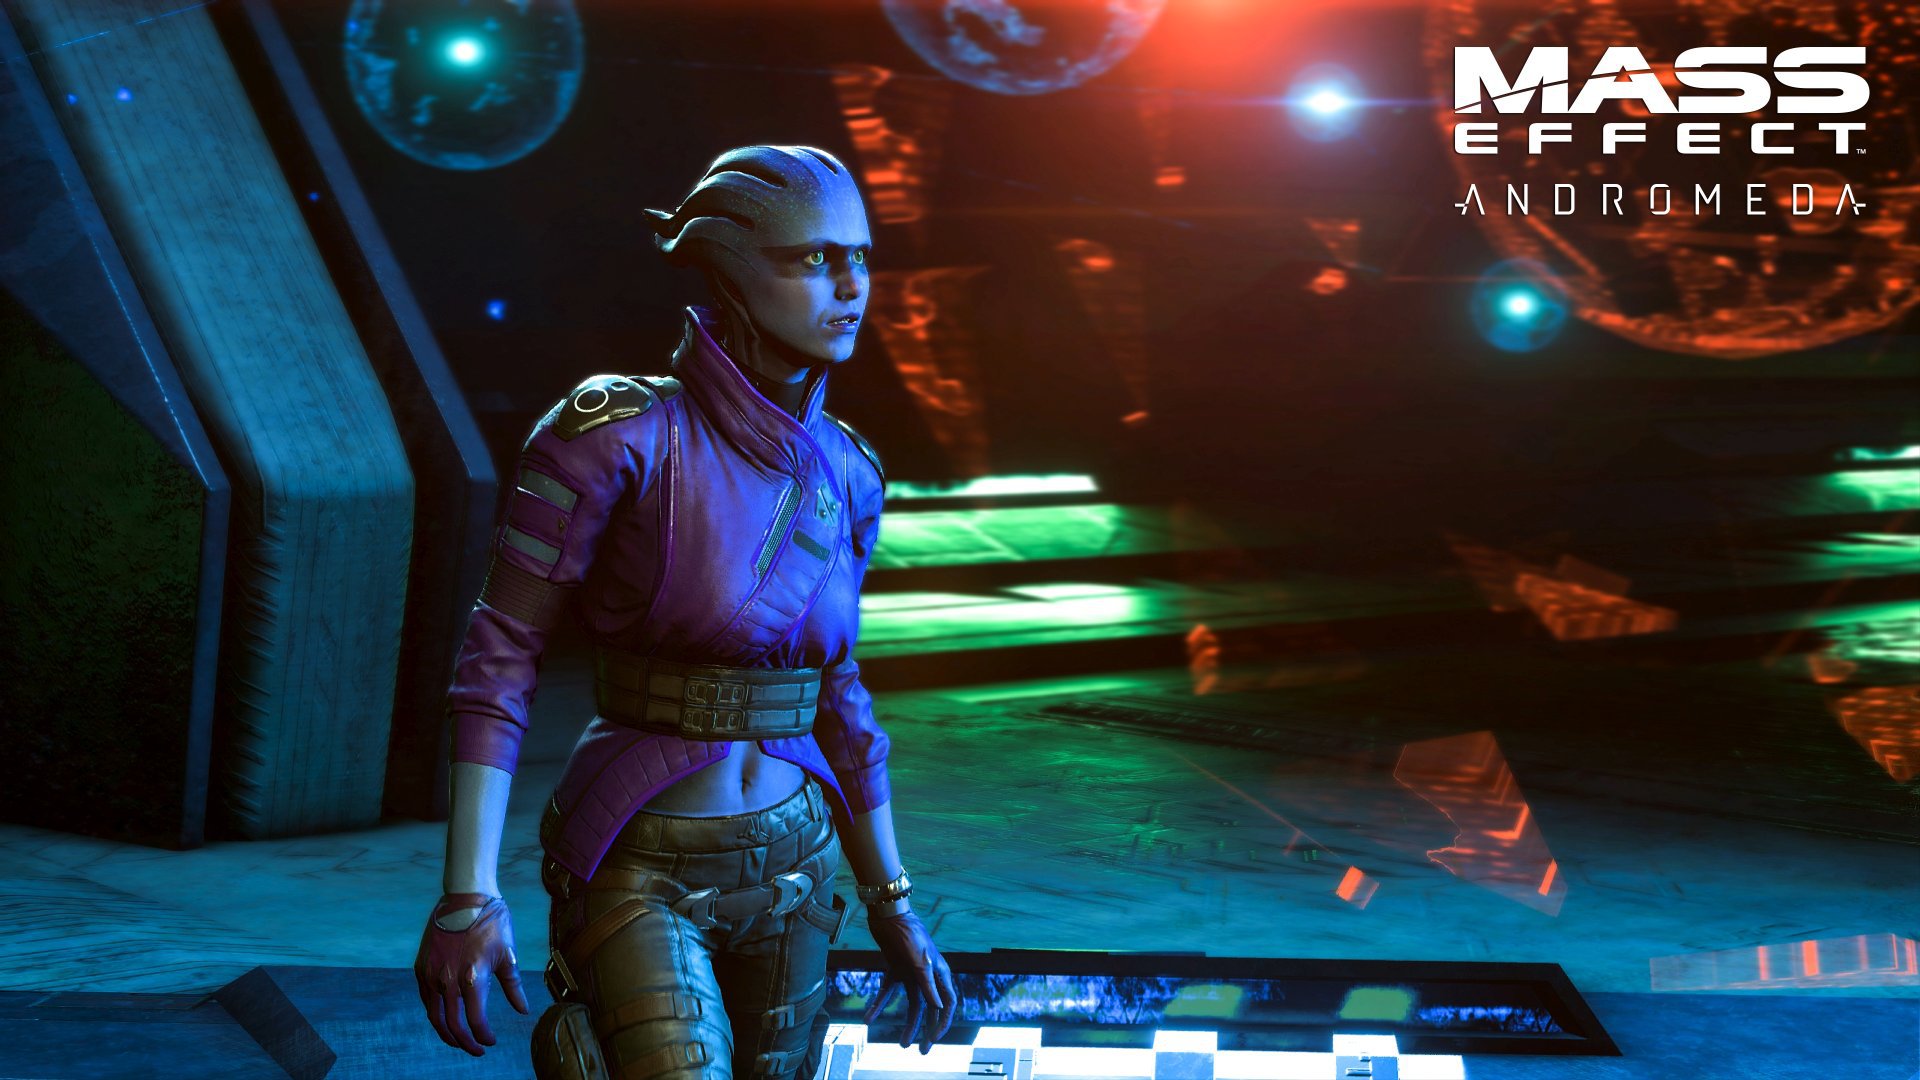 Mass Effect Andromeda Standard Recruit Edition 1